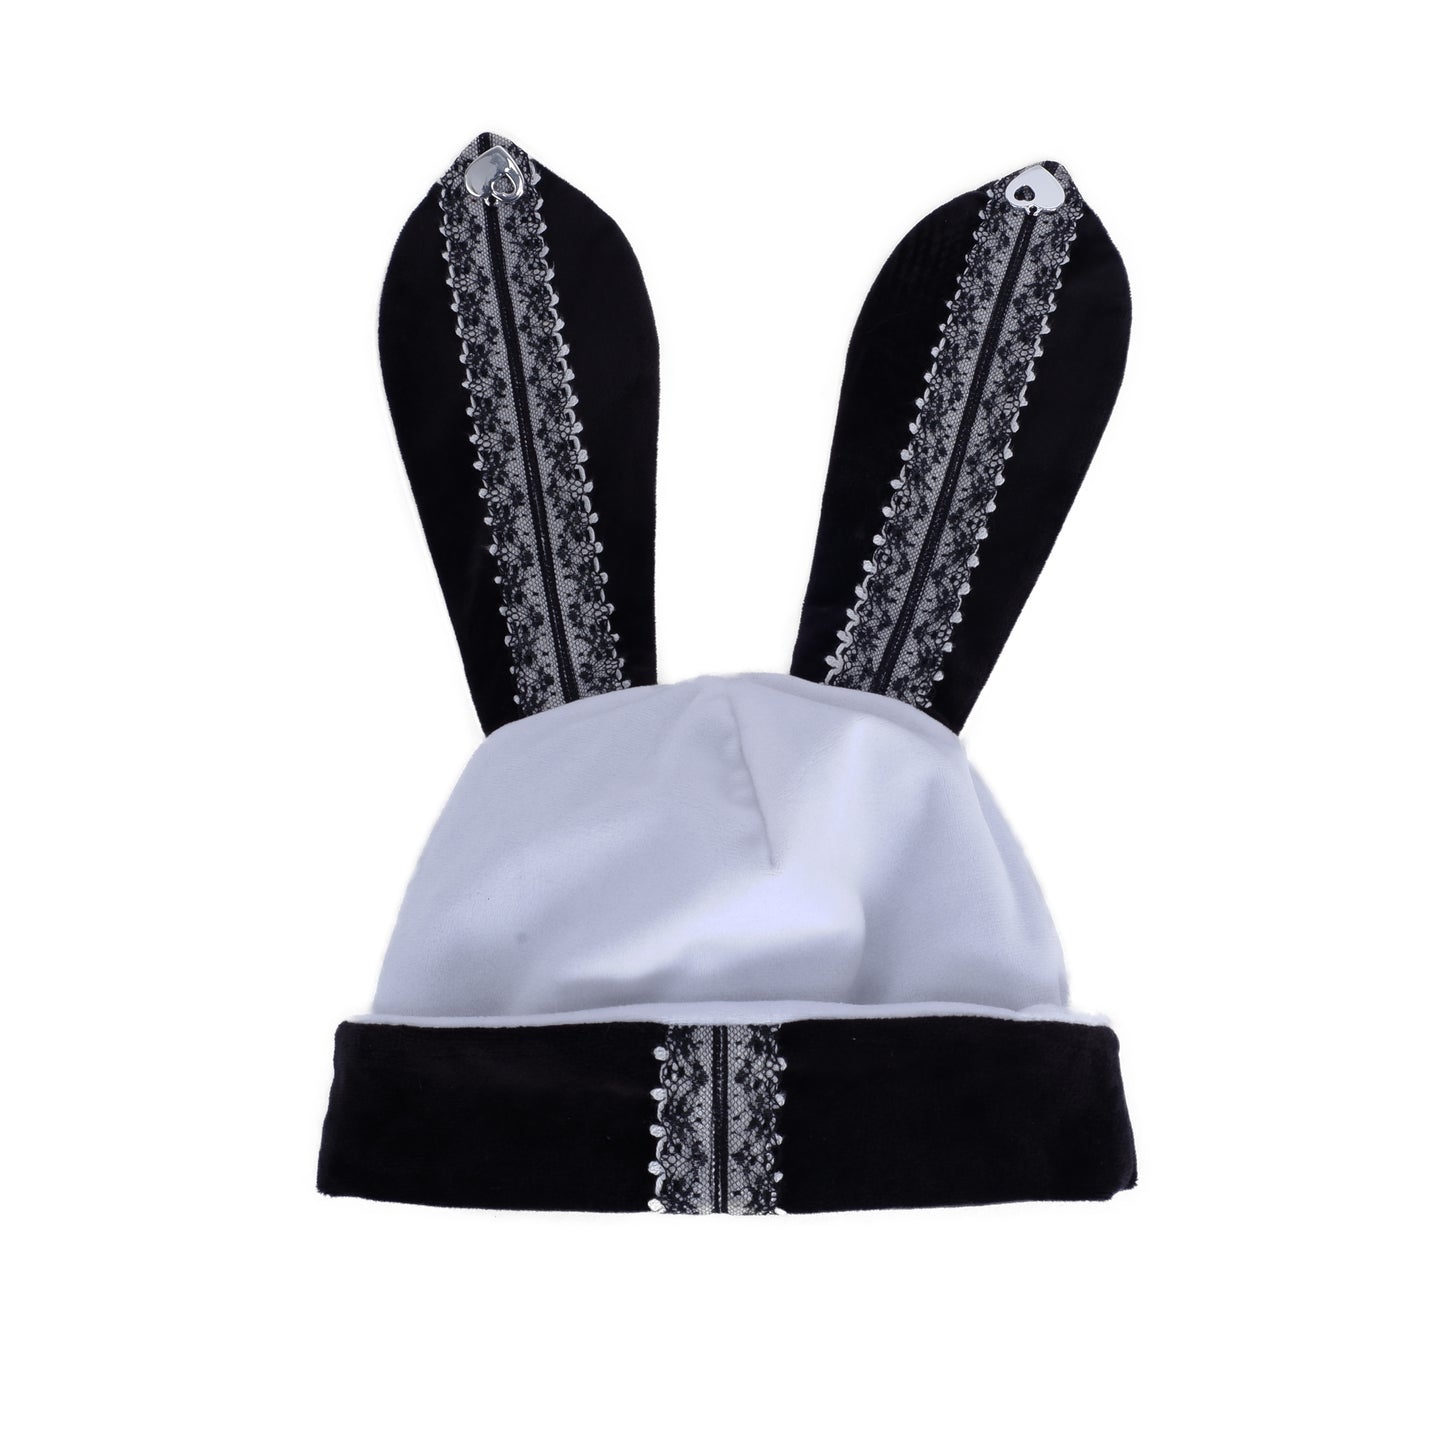 Bunny Ear Beanie Kuschelfleece - Schwarz Weiß